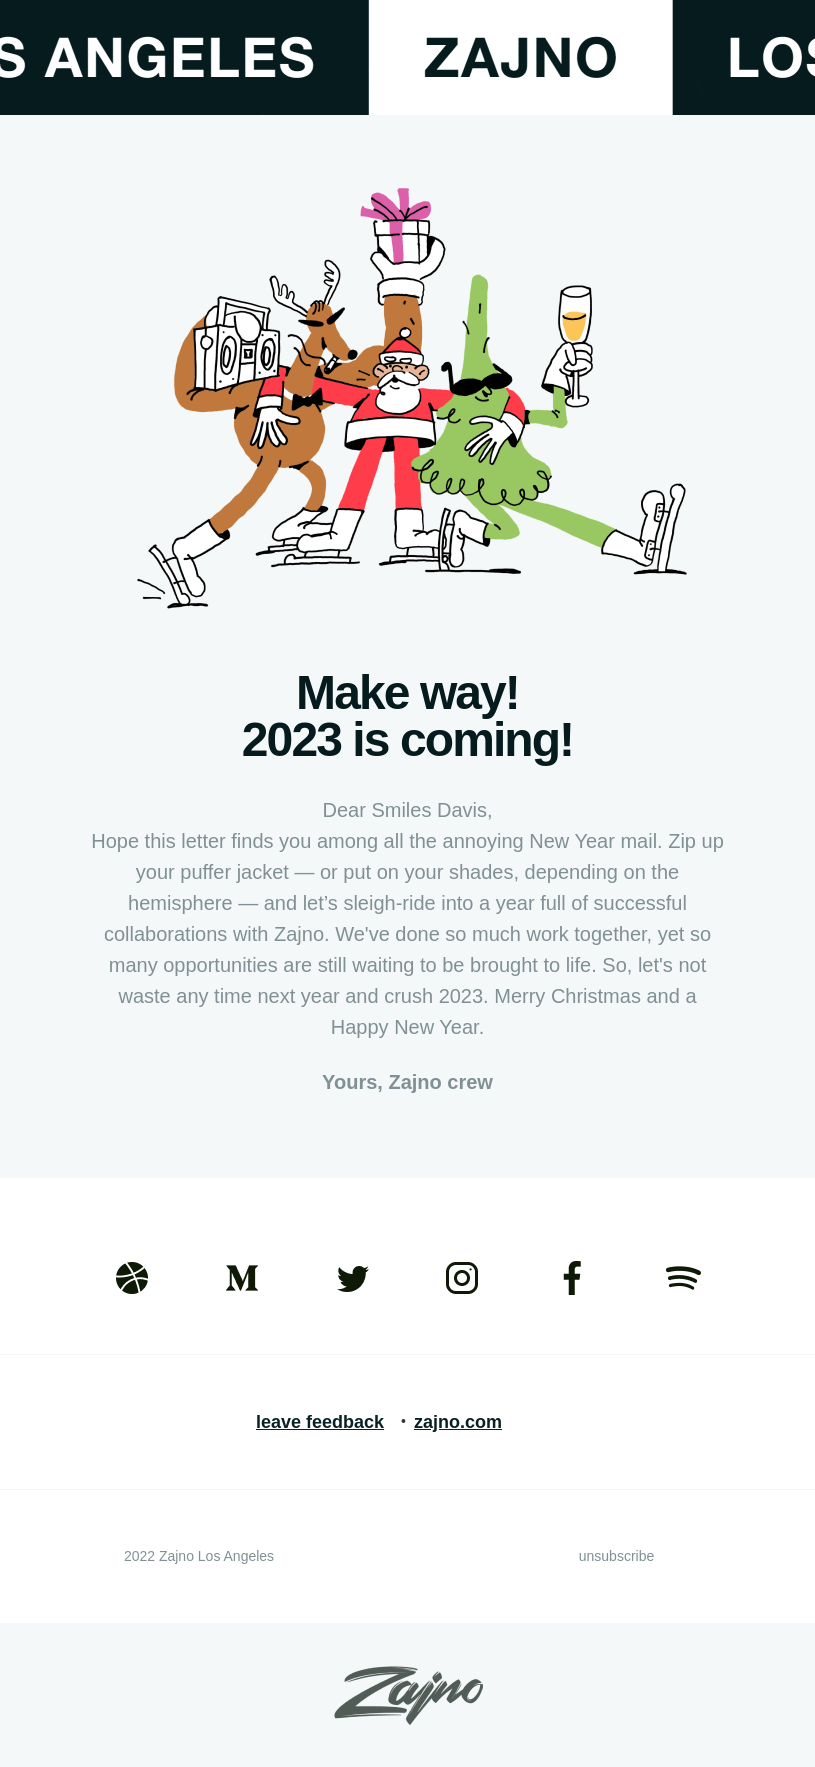 Make way! 2023 is coming!